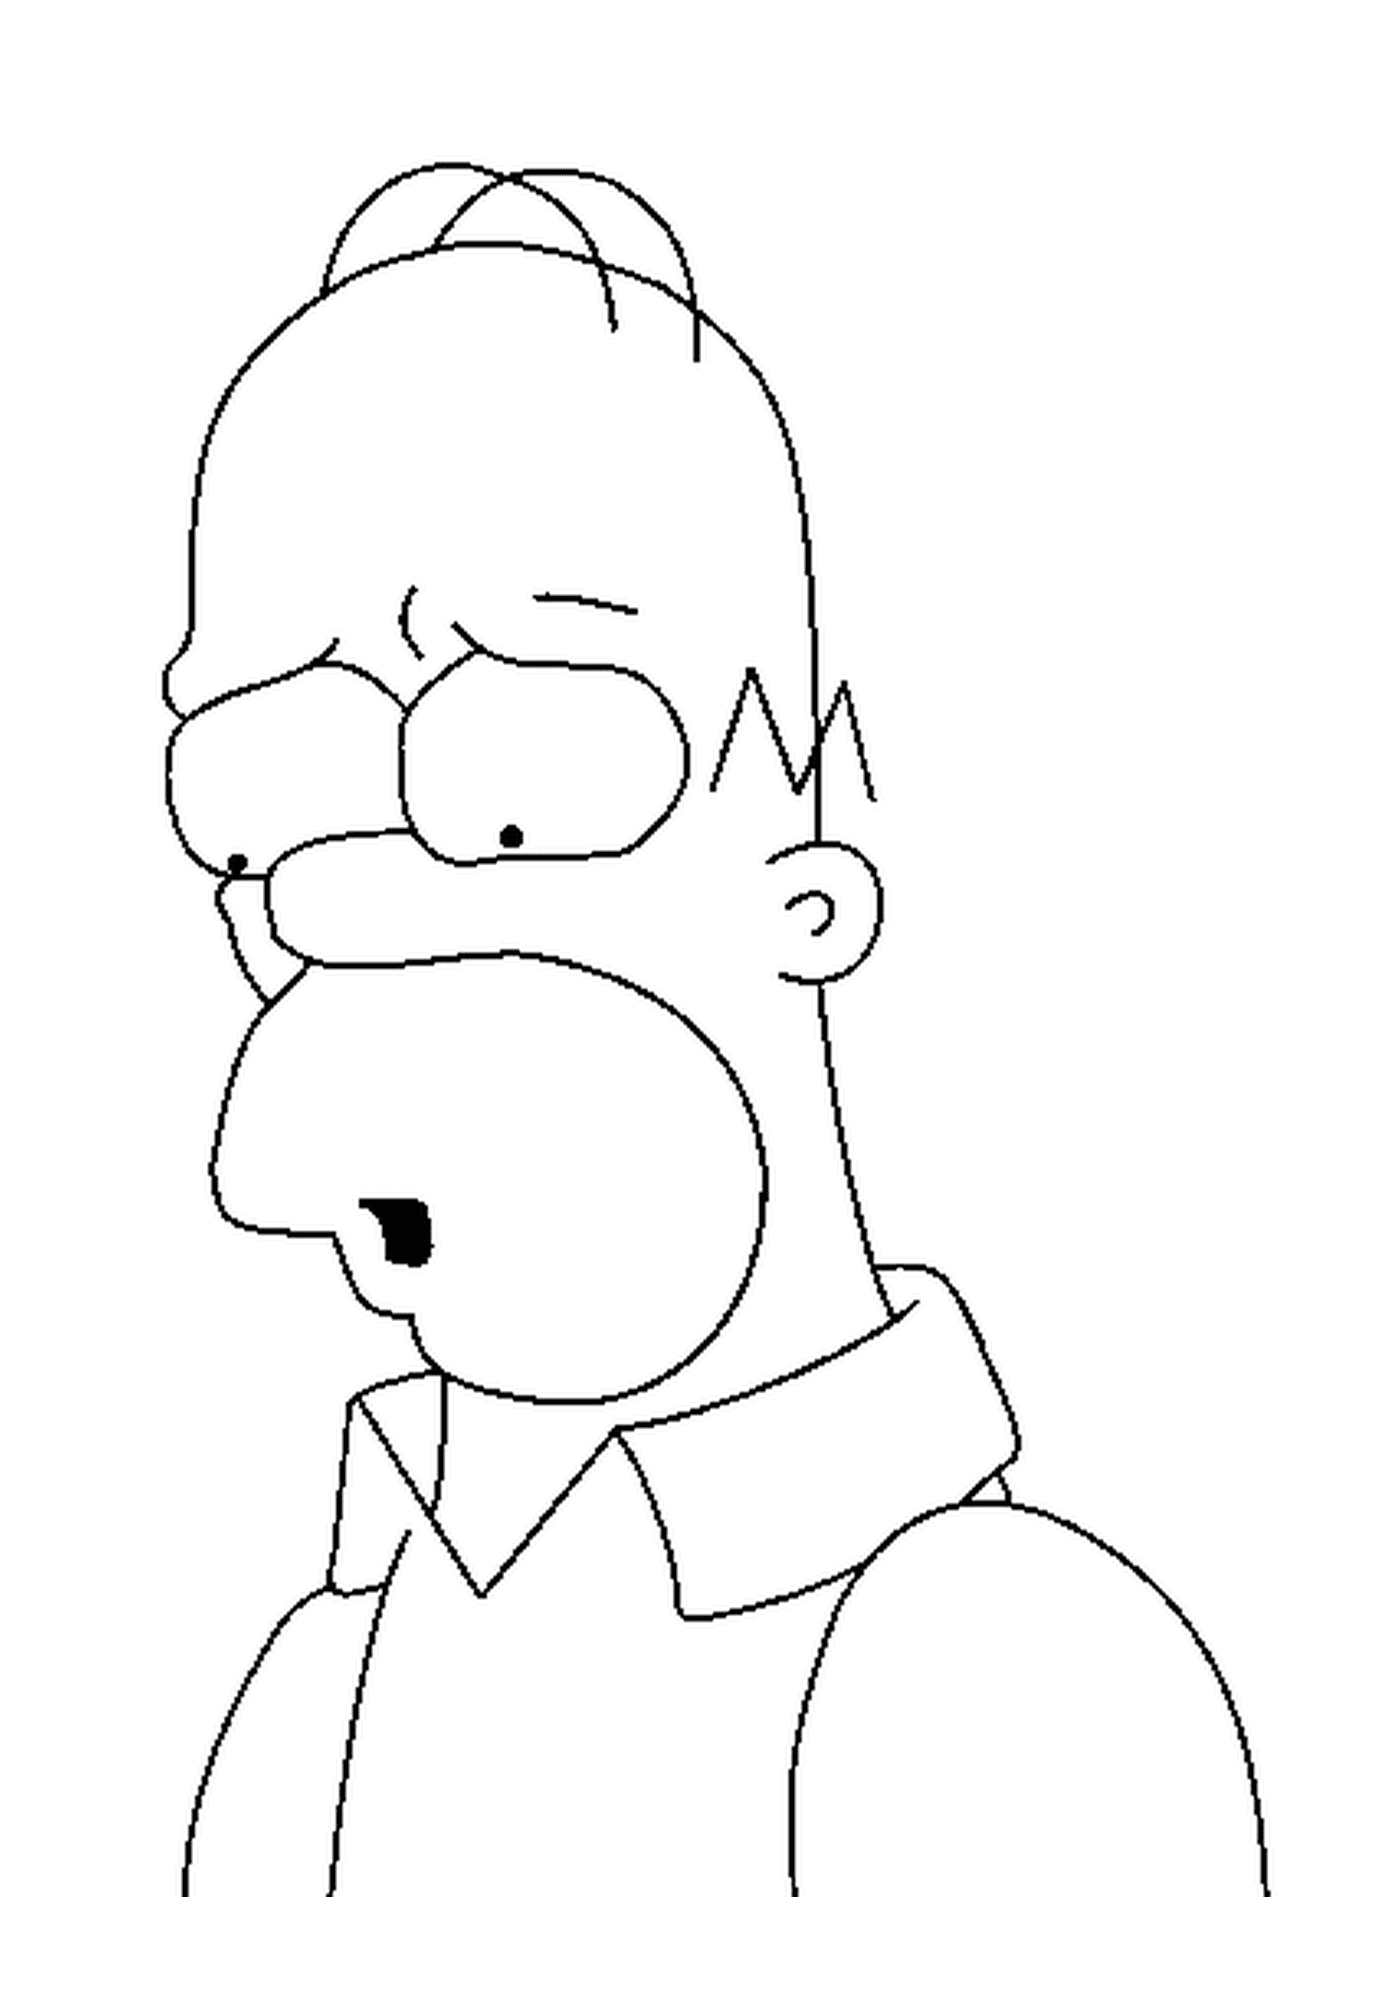  Homero Simpson, cara triste 